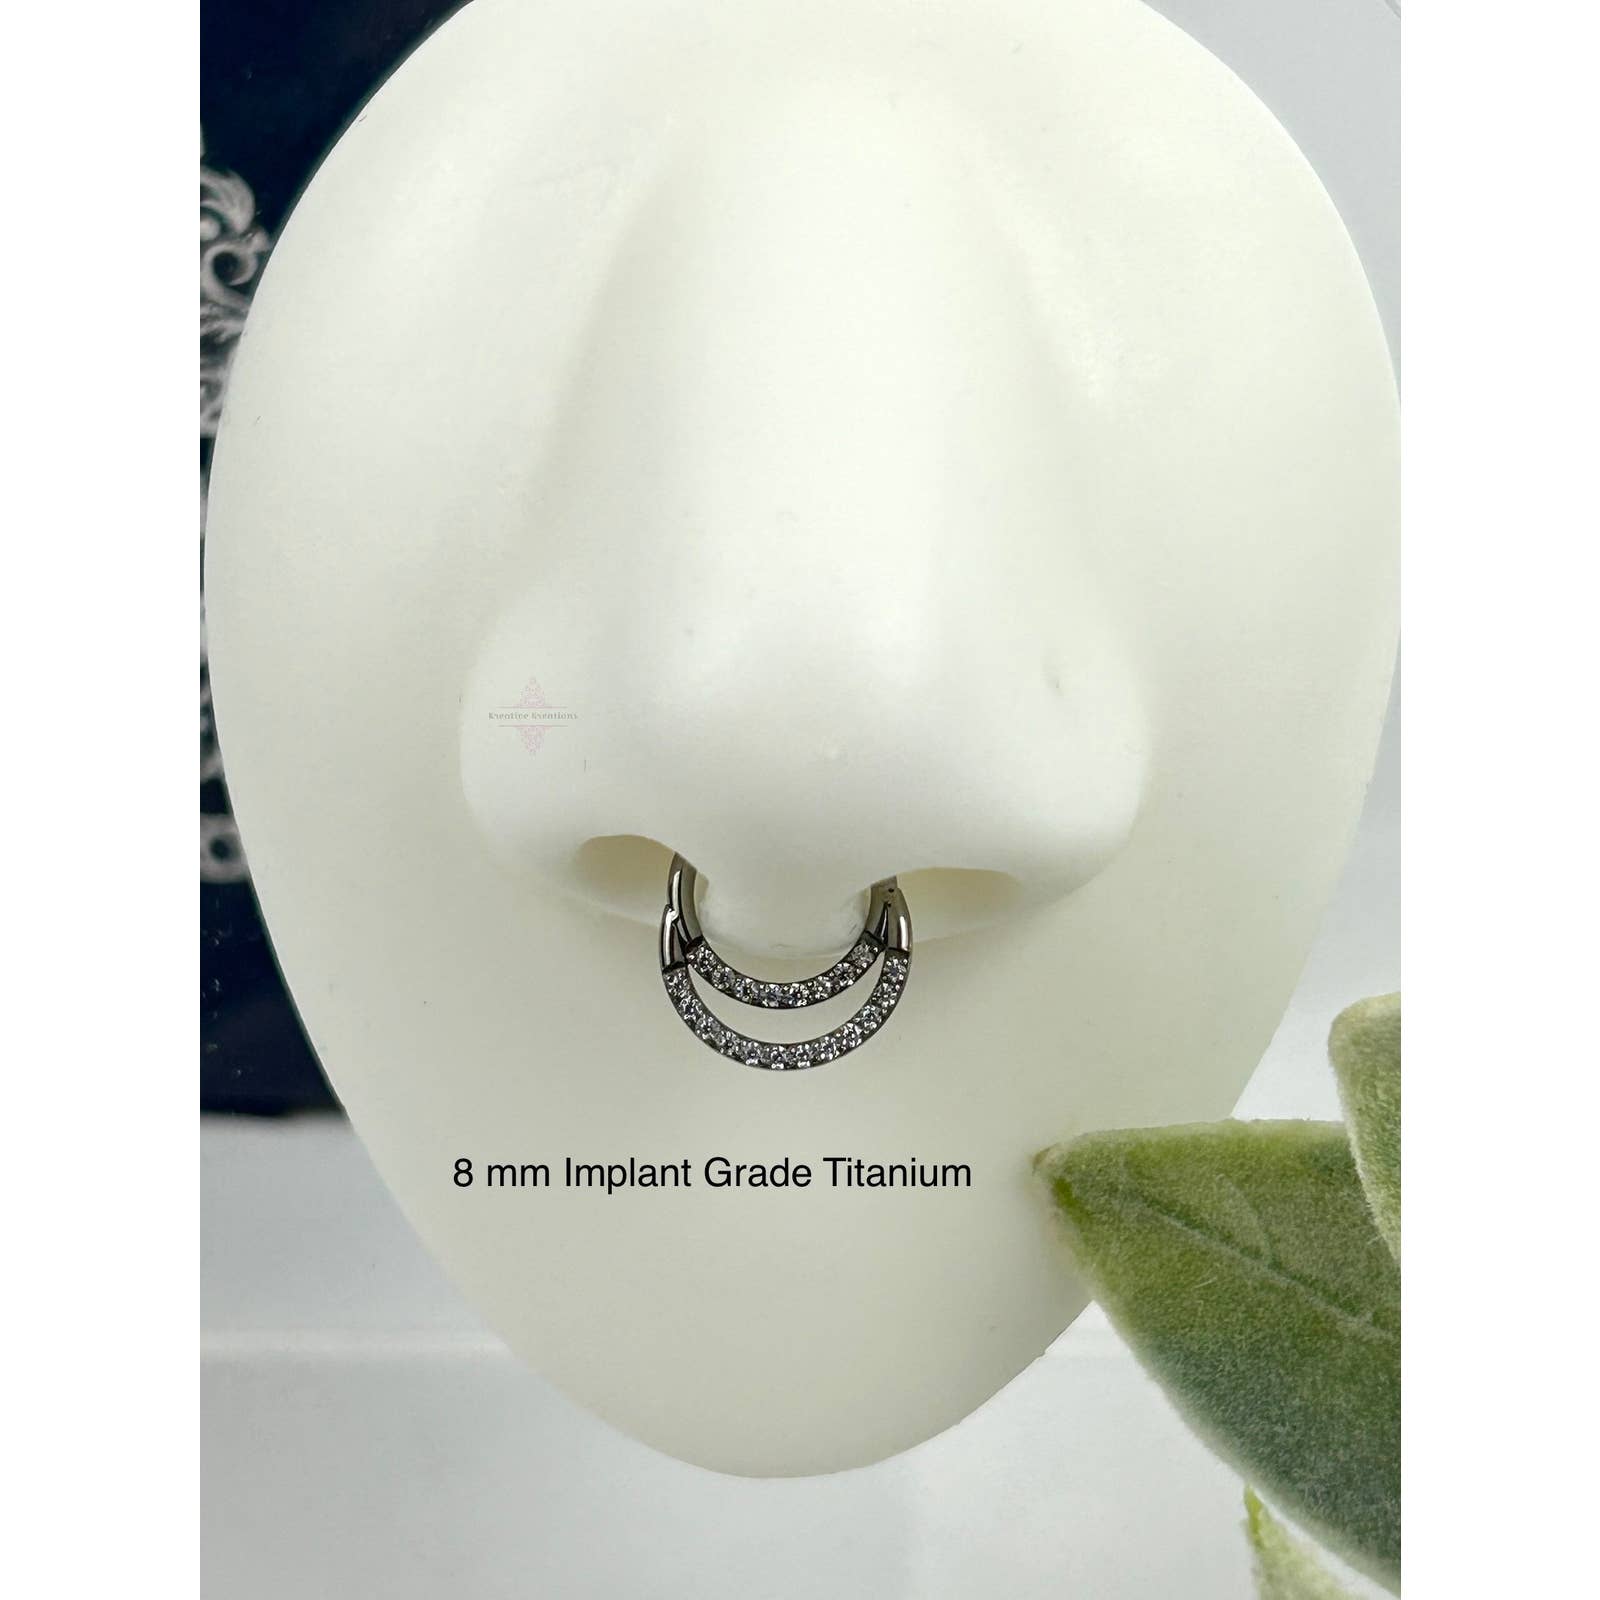 Implant Grade Titanium Septum Ring - 16G CZ Paved Clicker Ring